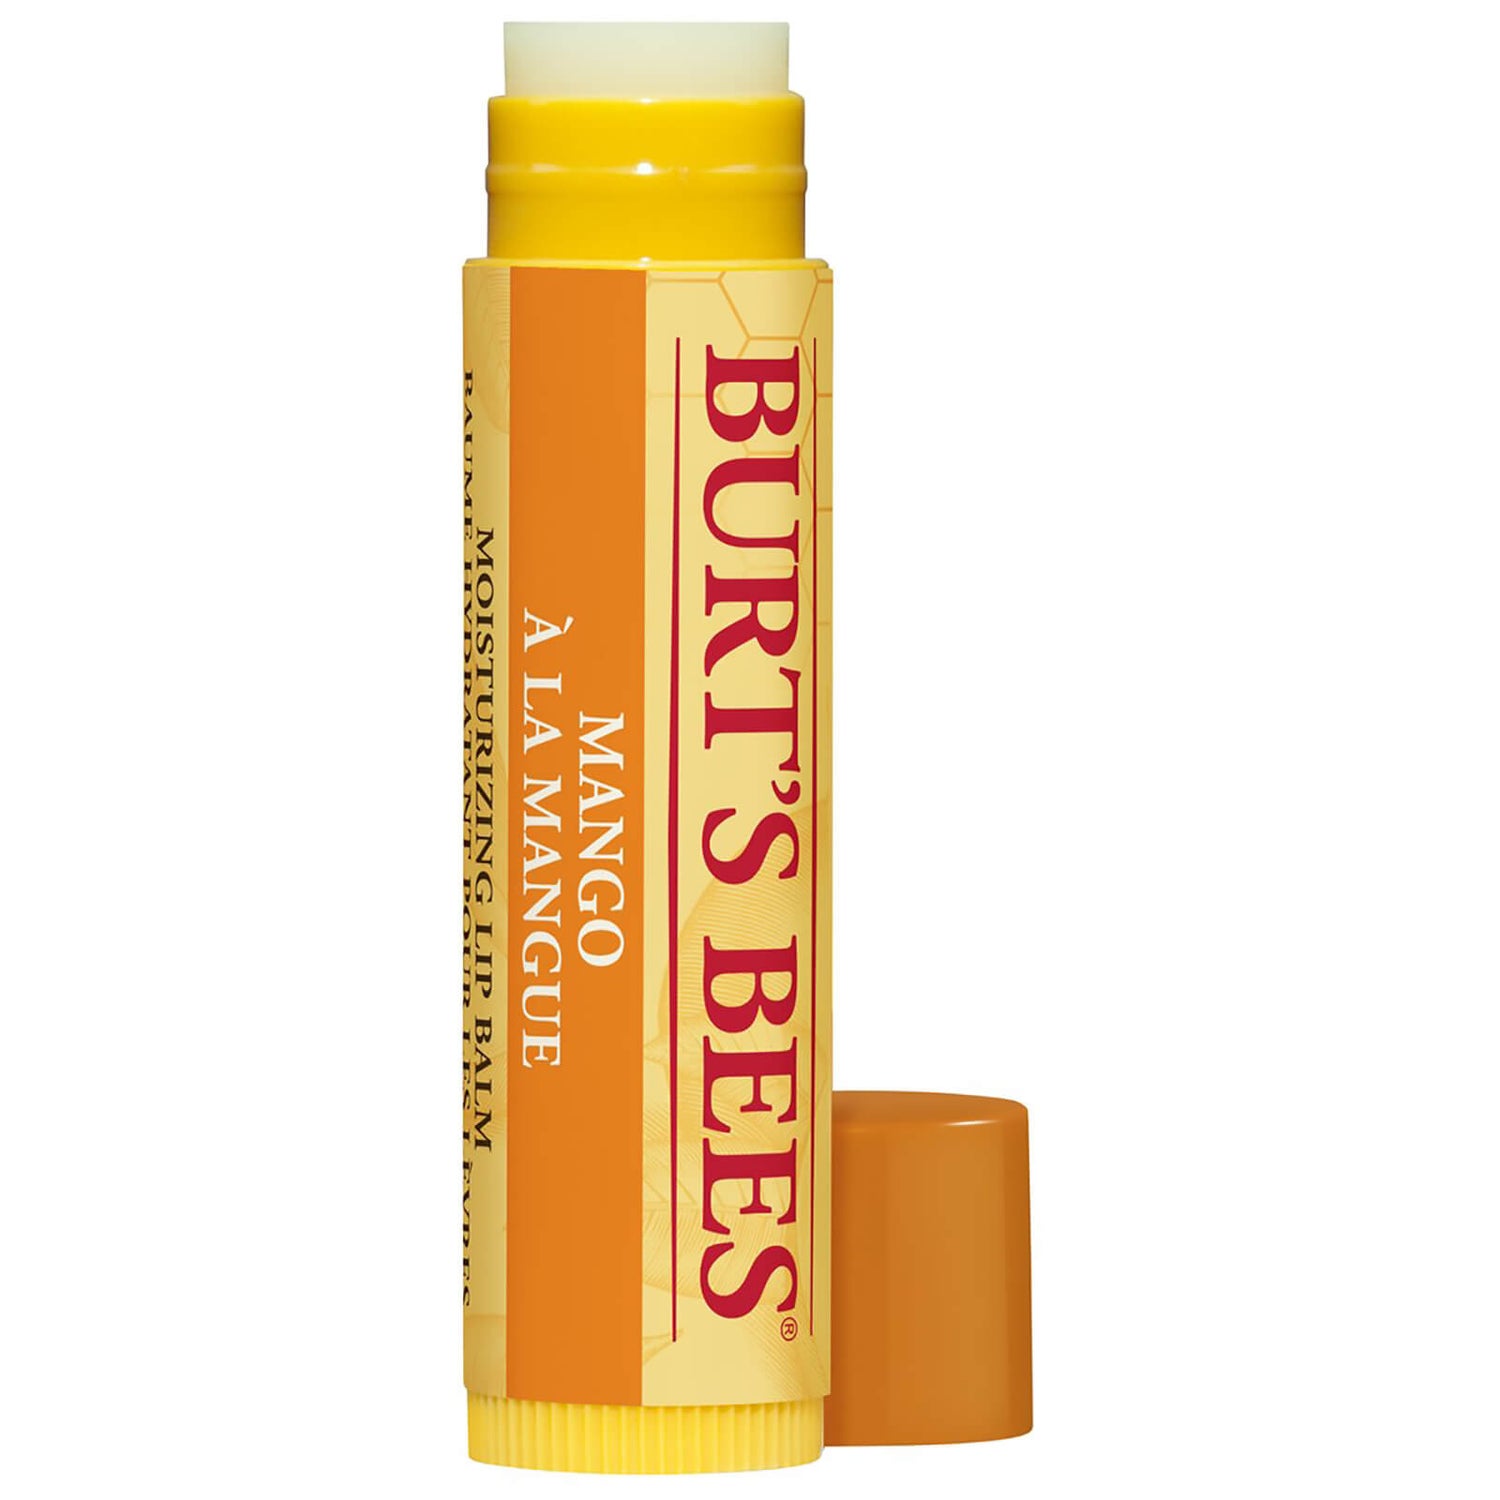 Burt's Bees balsam do ust o zapachu mango, sztyft (4,25 g)